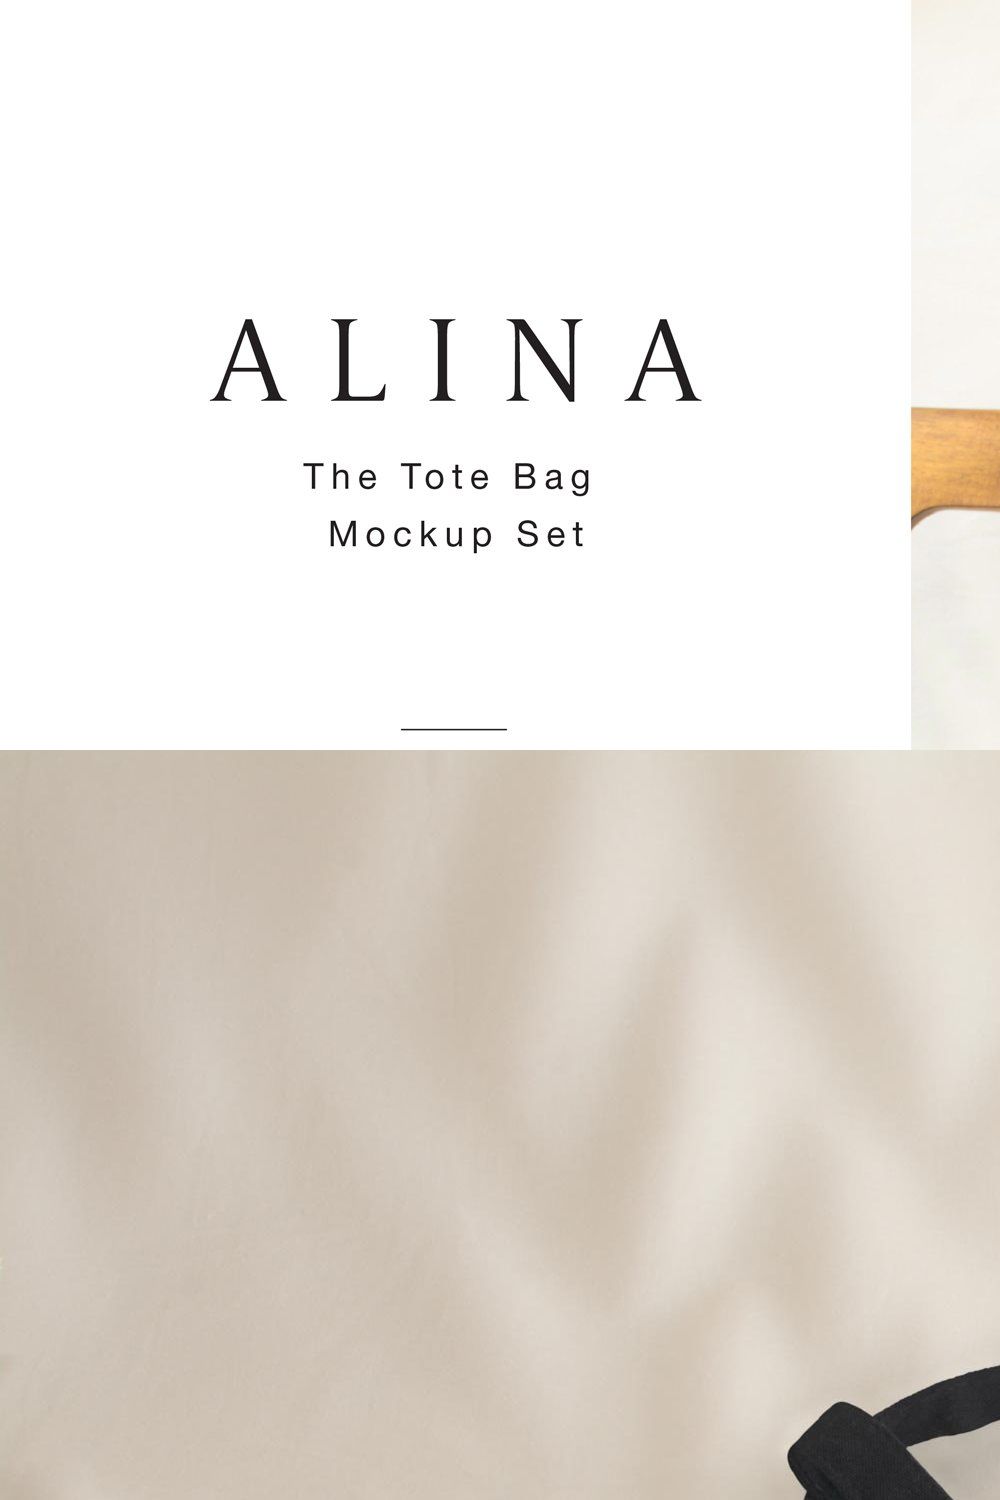 ALINA The Tote Bag Mockup Set pinterest preview image.